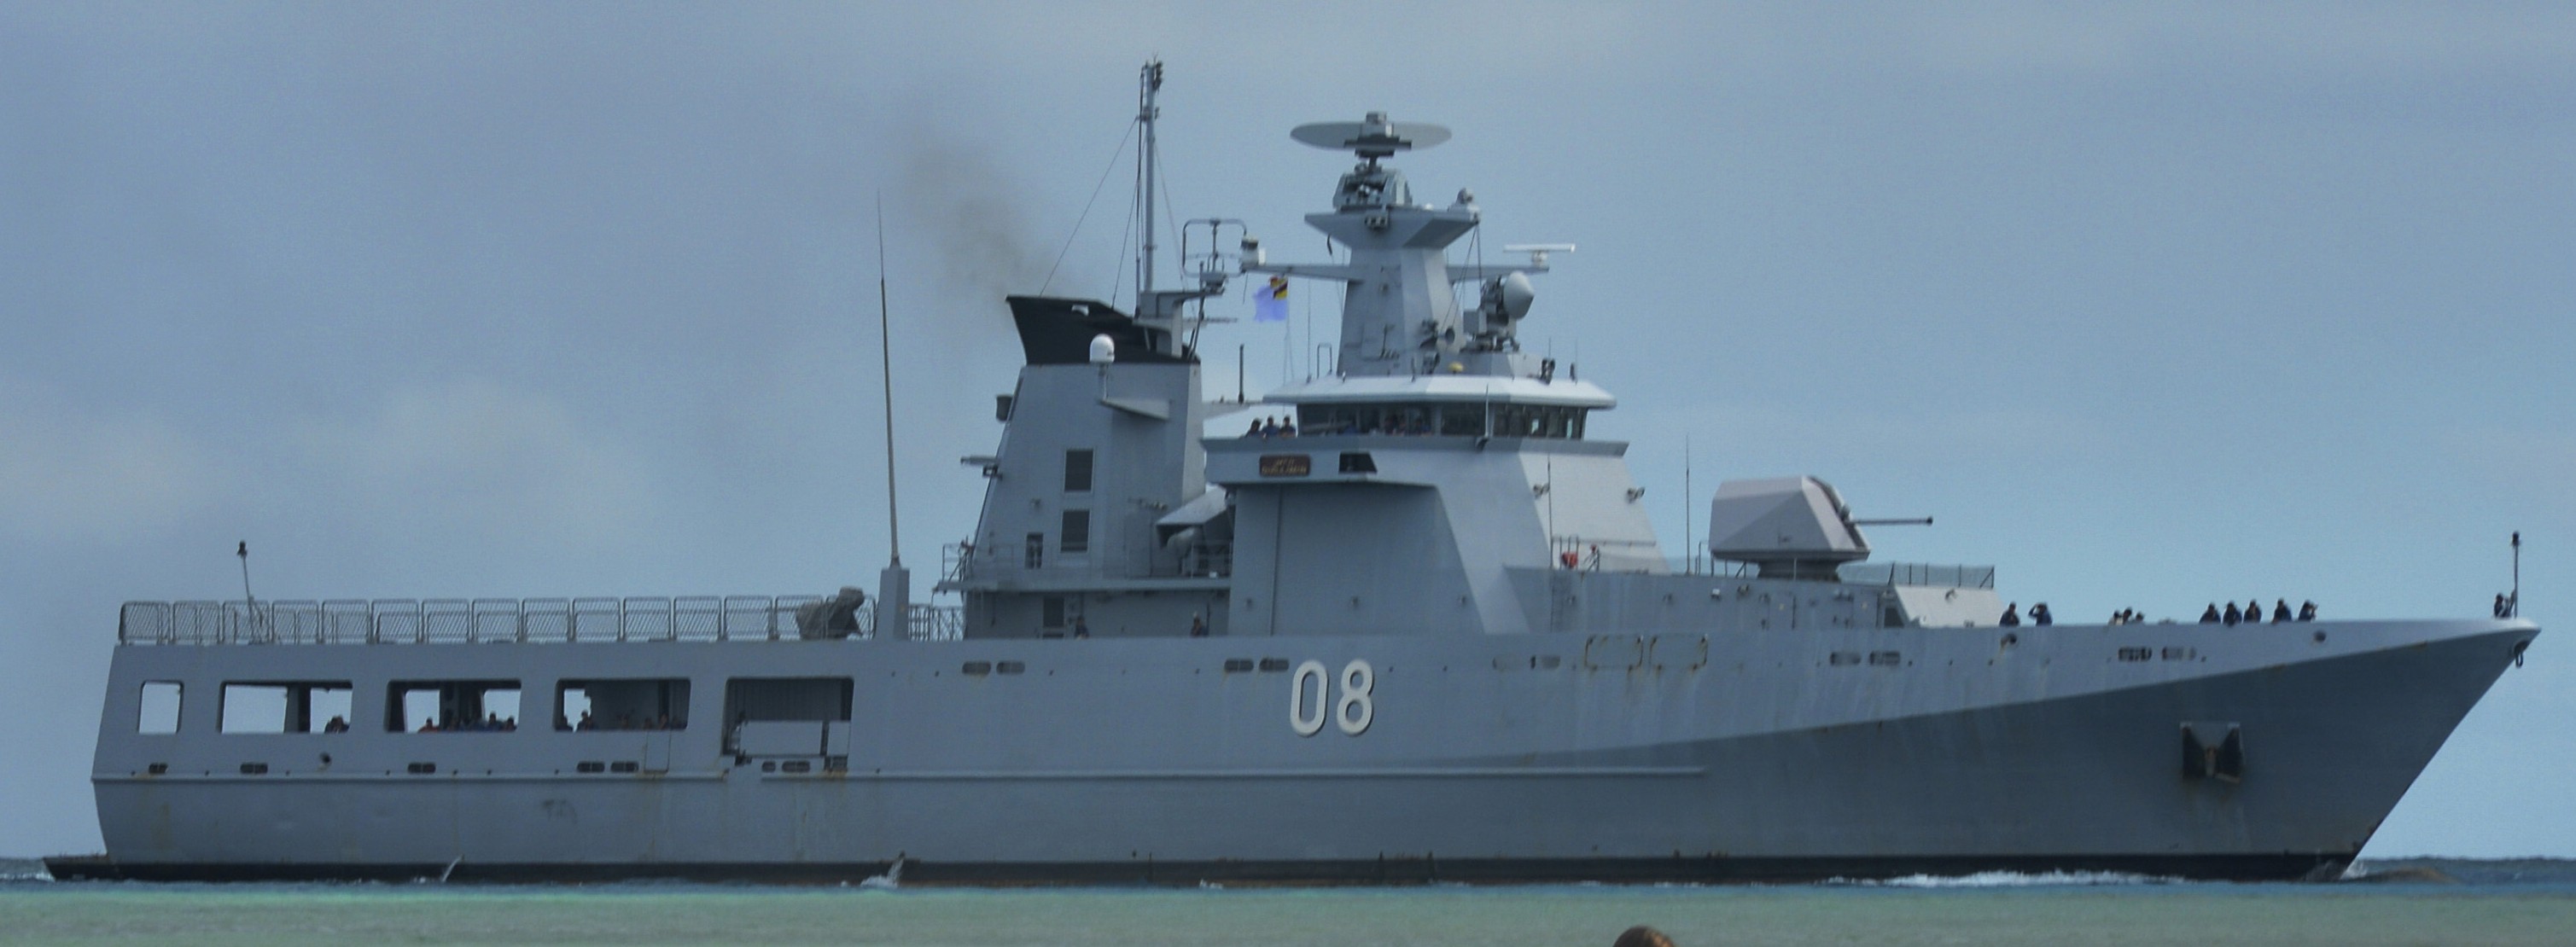 opv 08 kdb darulaman offshore patrol vessel darussalem class royal brunei navy rimpac hawaii 05